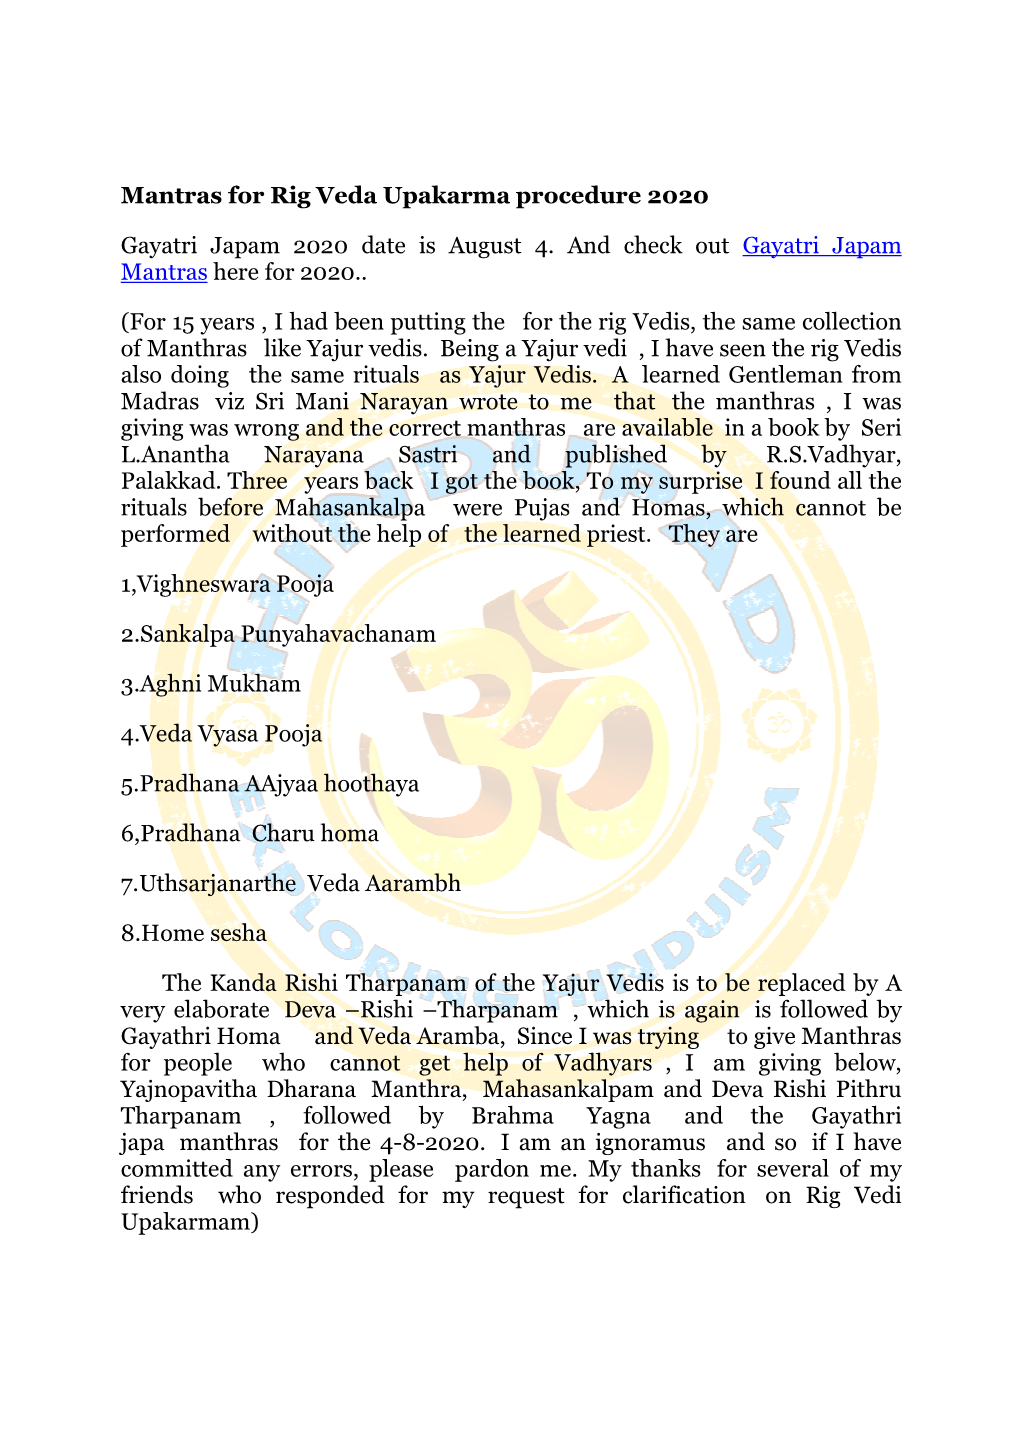 Mantras for Rig Veda Upakarma Procedure 2020 Gayatri Japam